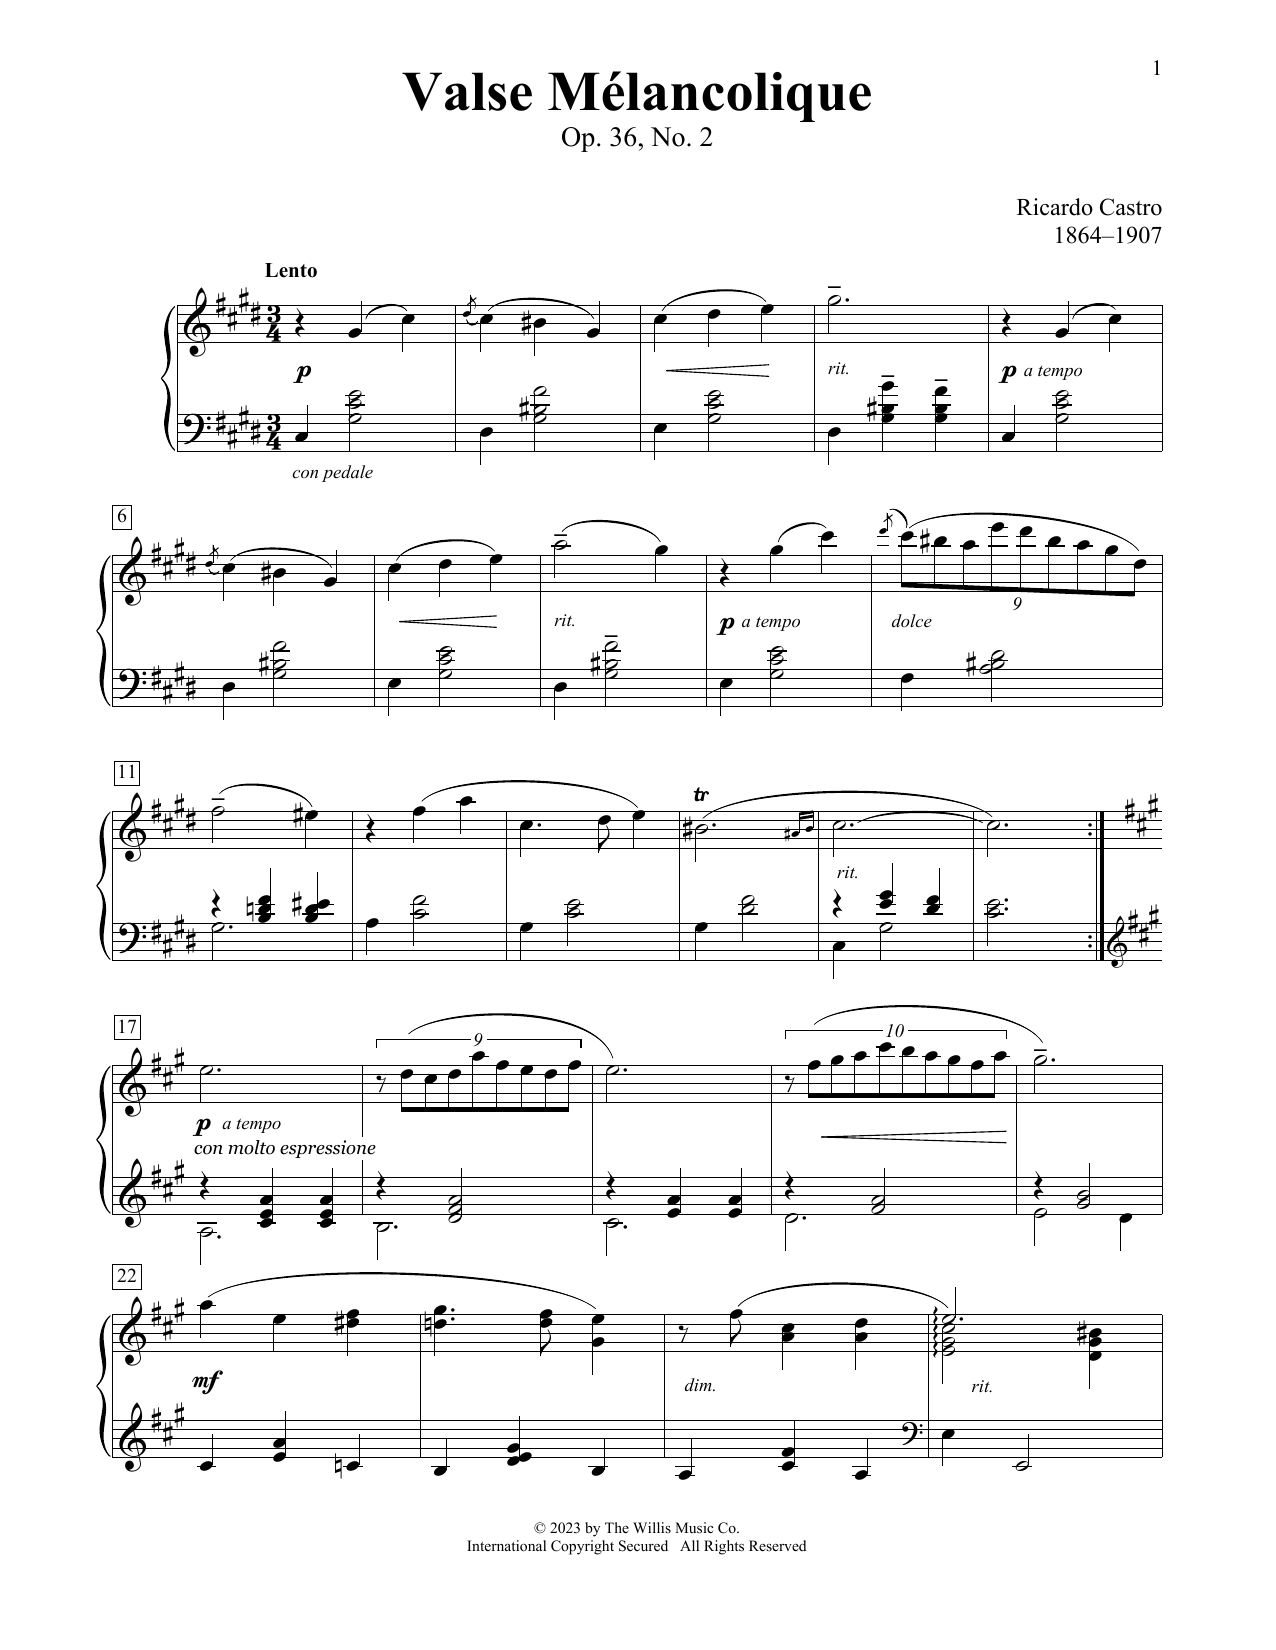 Ricardo Castro Valse Melancolique, Op. 36, No.2 Sheet Music Notes & Chords for Educational Piano - Download or Print PDF